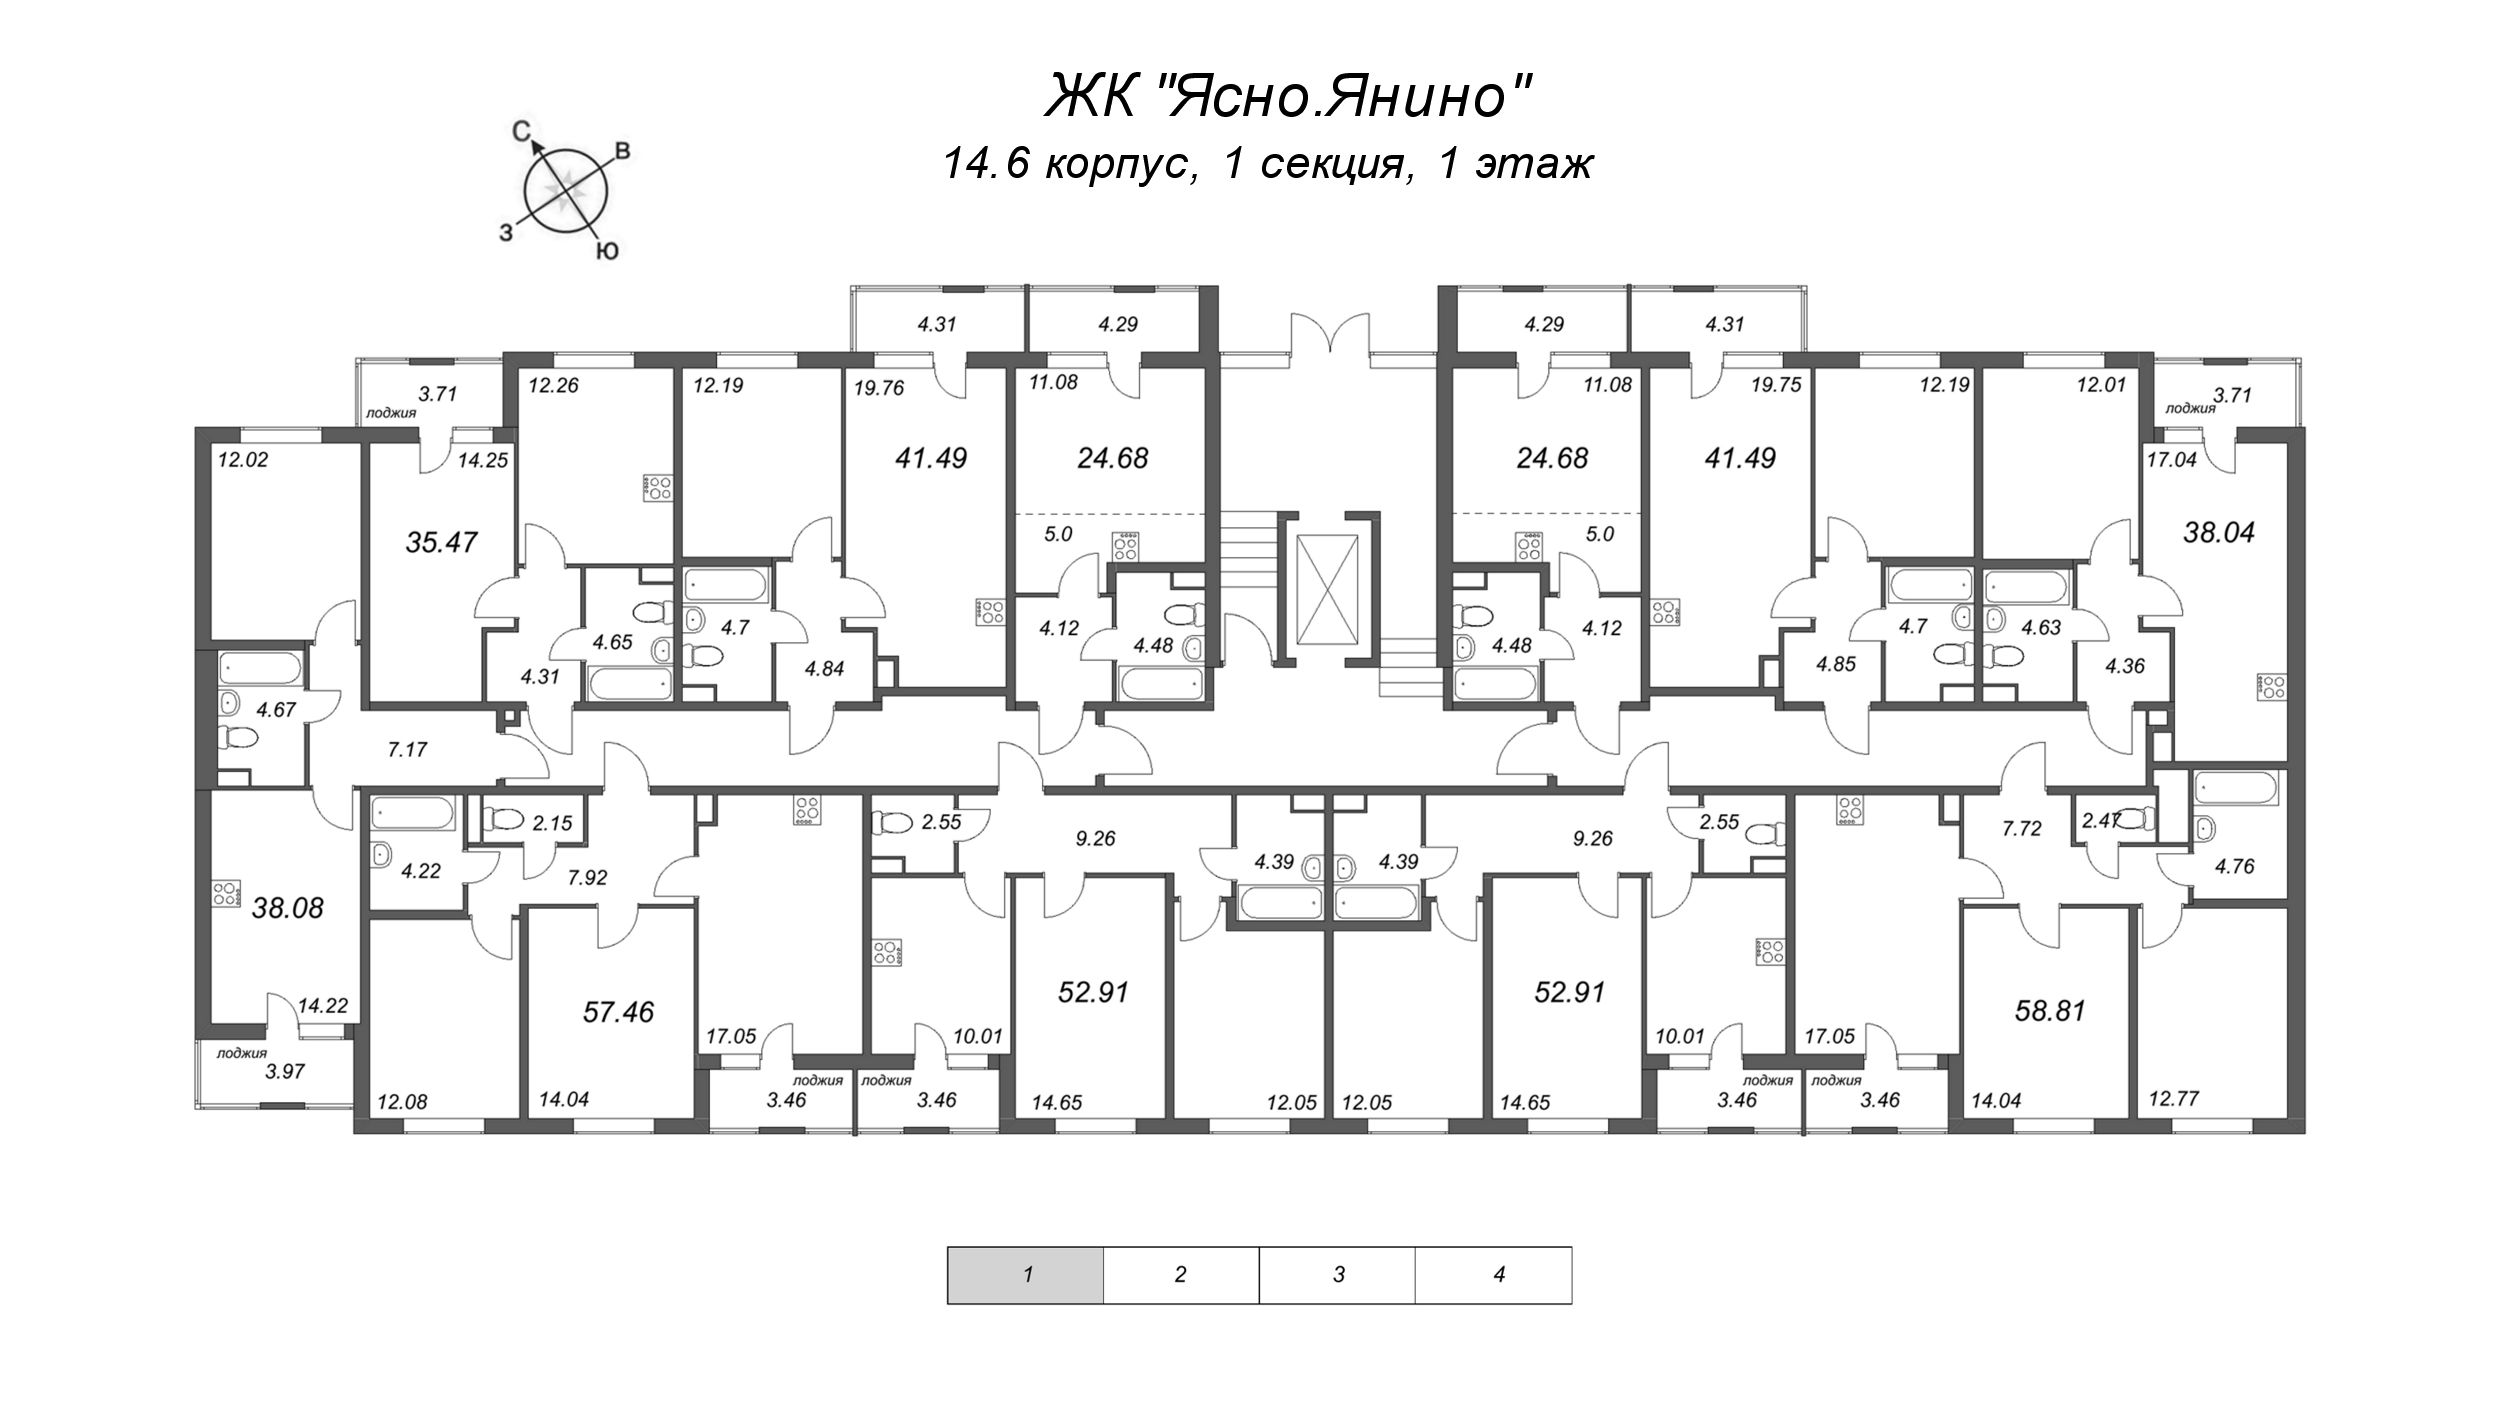 3-комнатная (Евро) квартира, 58.81 м² - планировка этажа